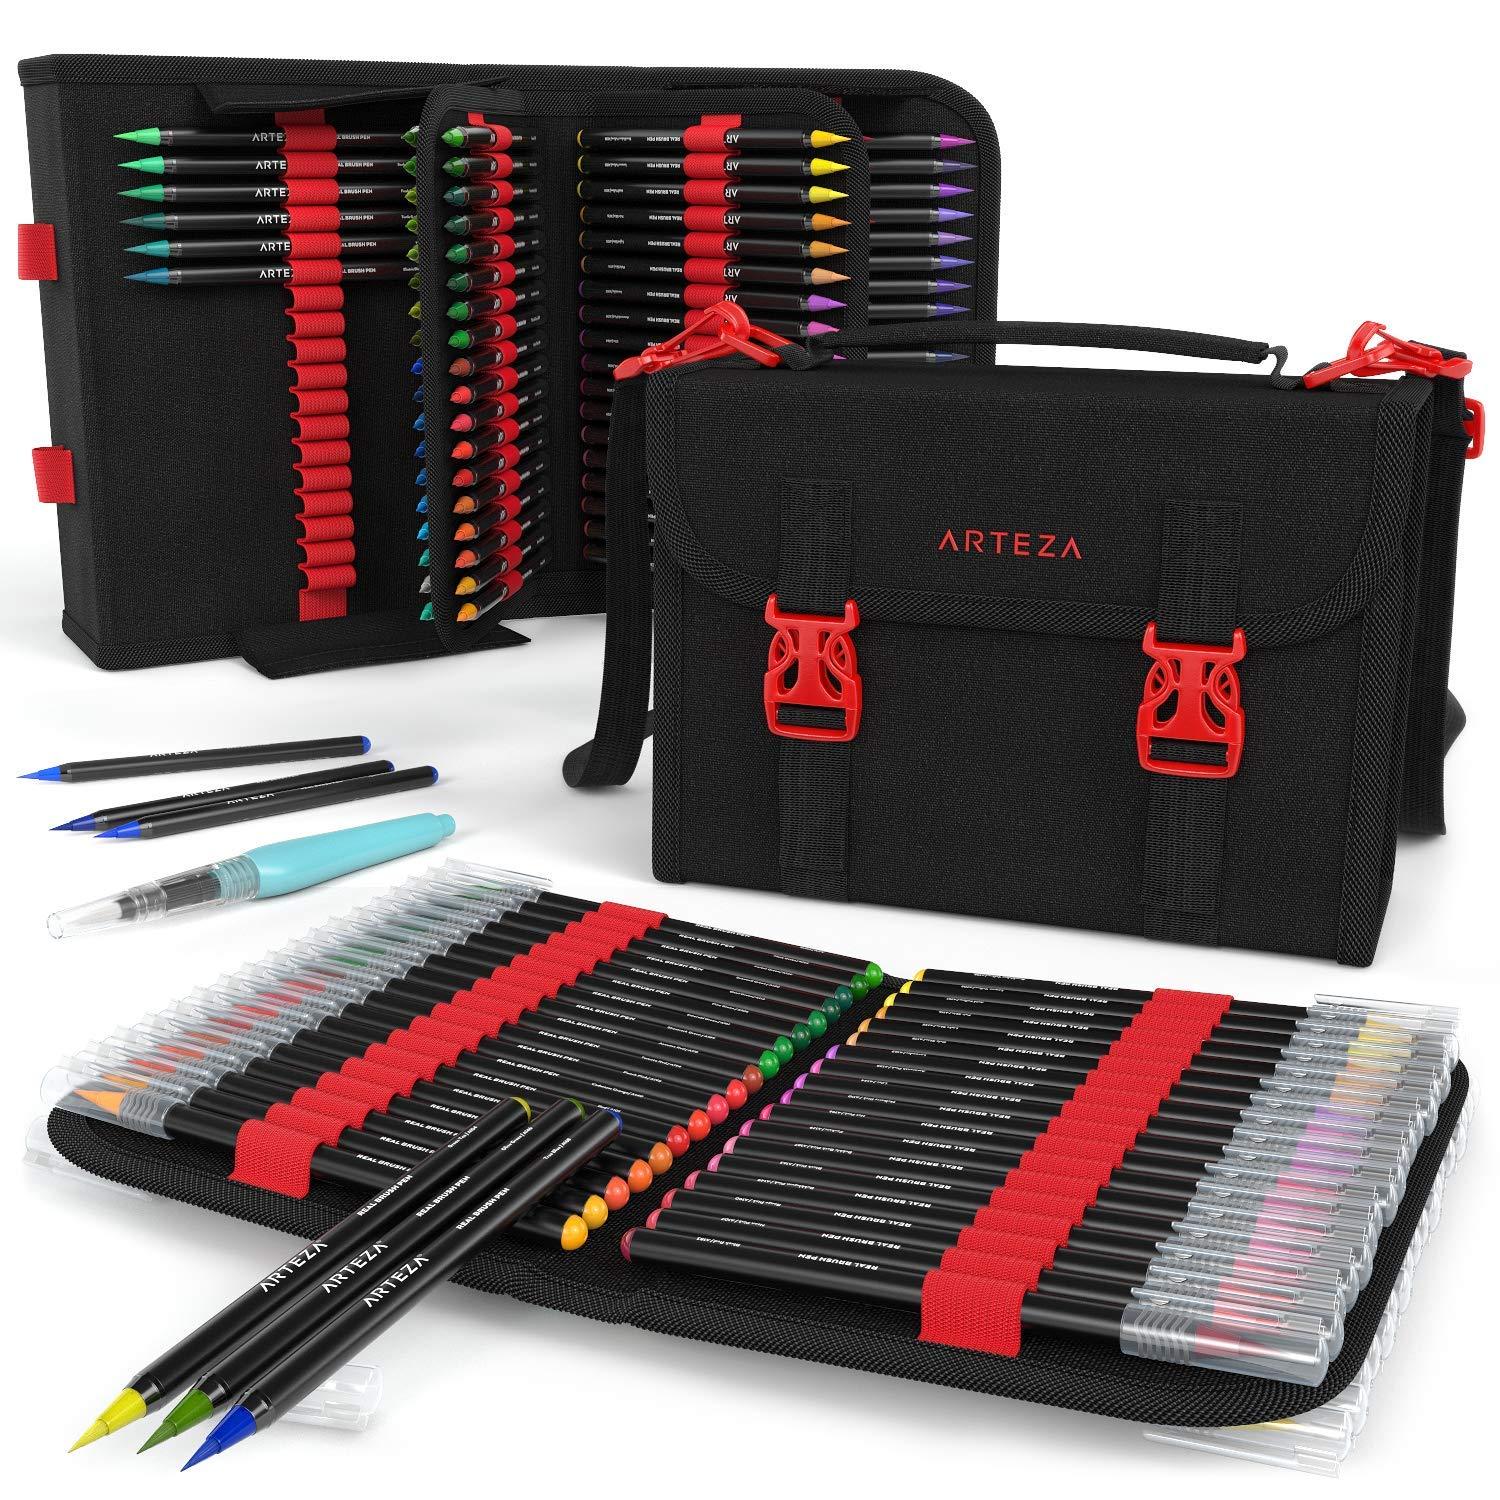 Product Review: Arteza Watercolor Real Brush Pens